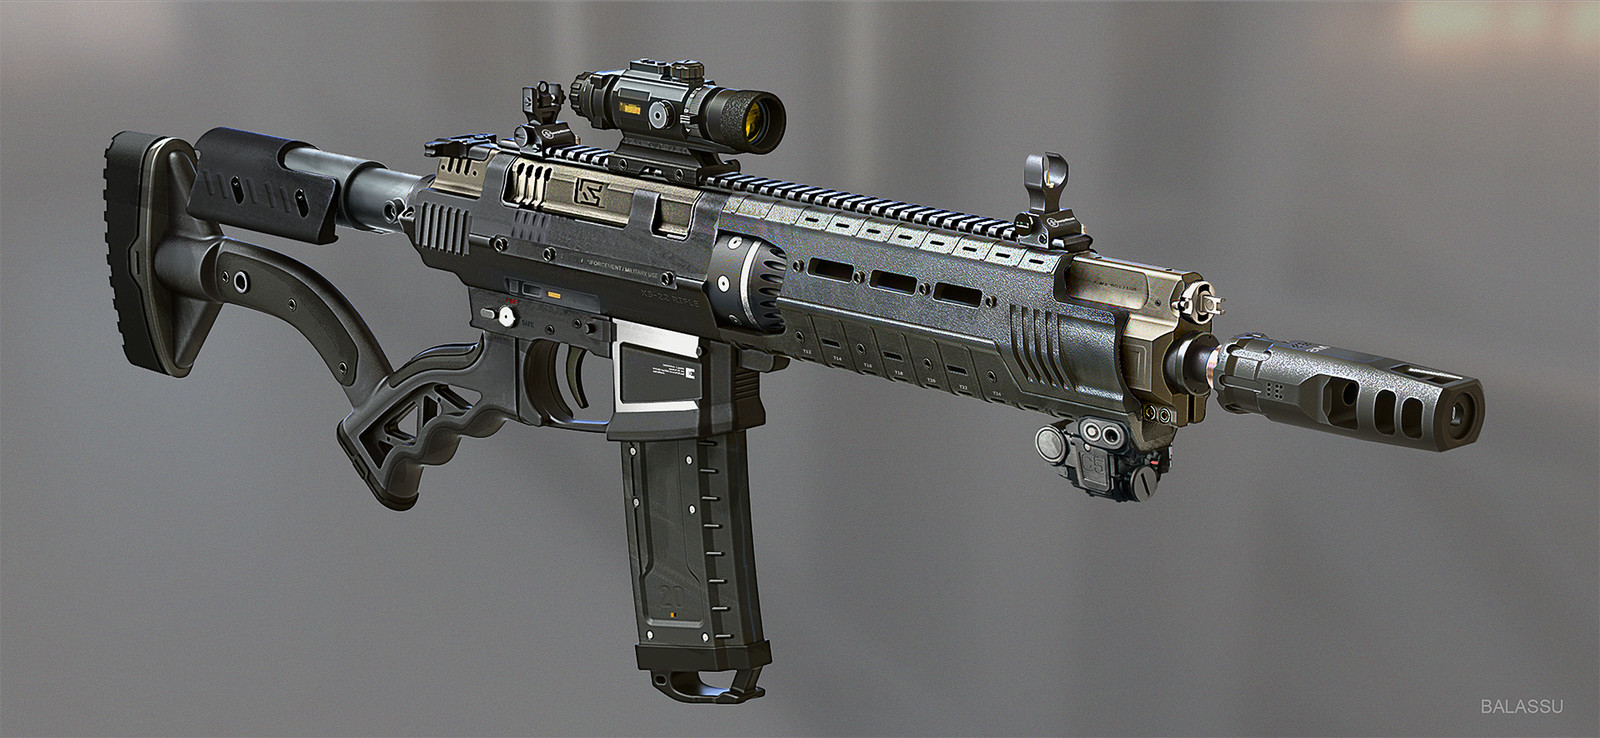 Rifle Concept 01